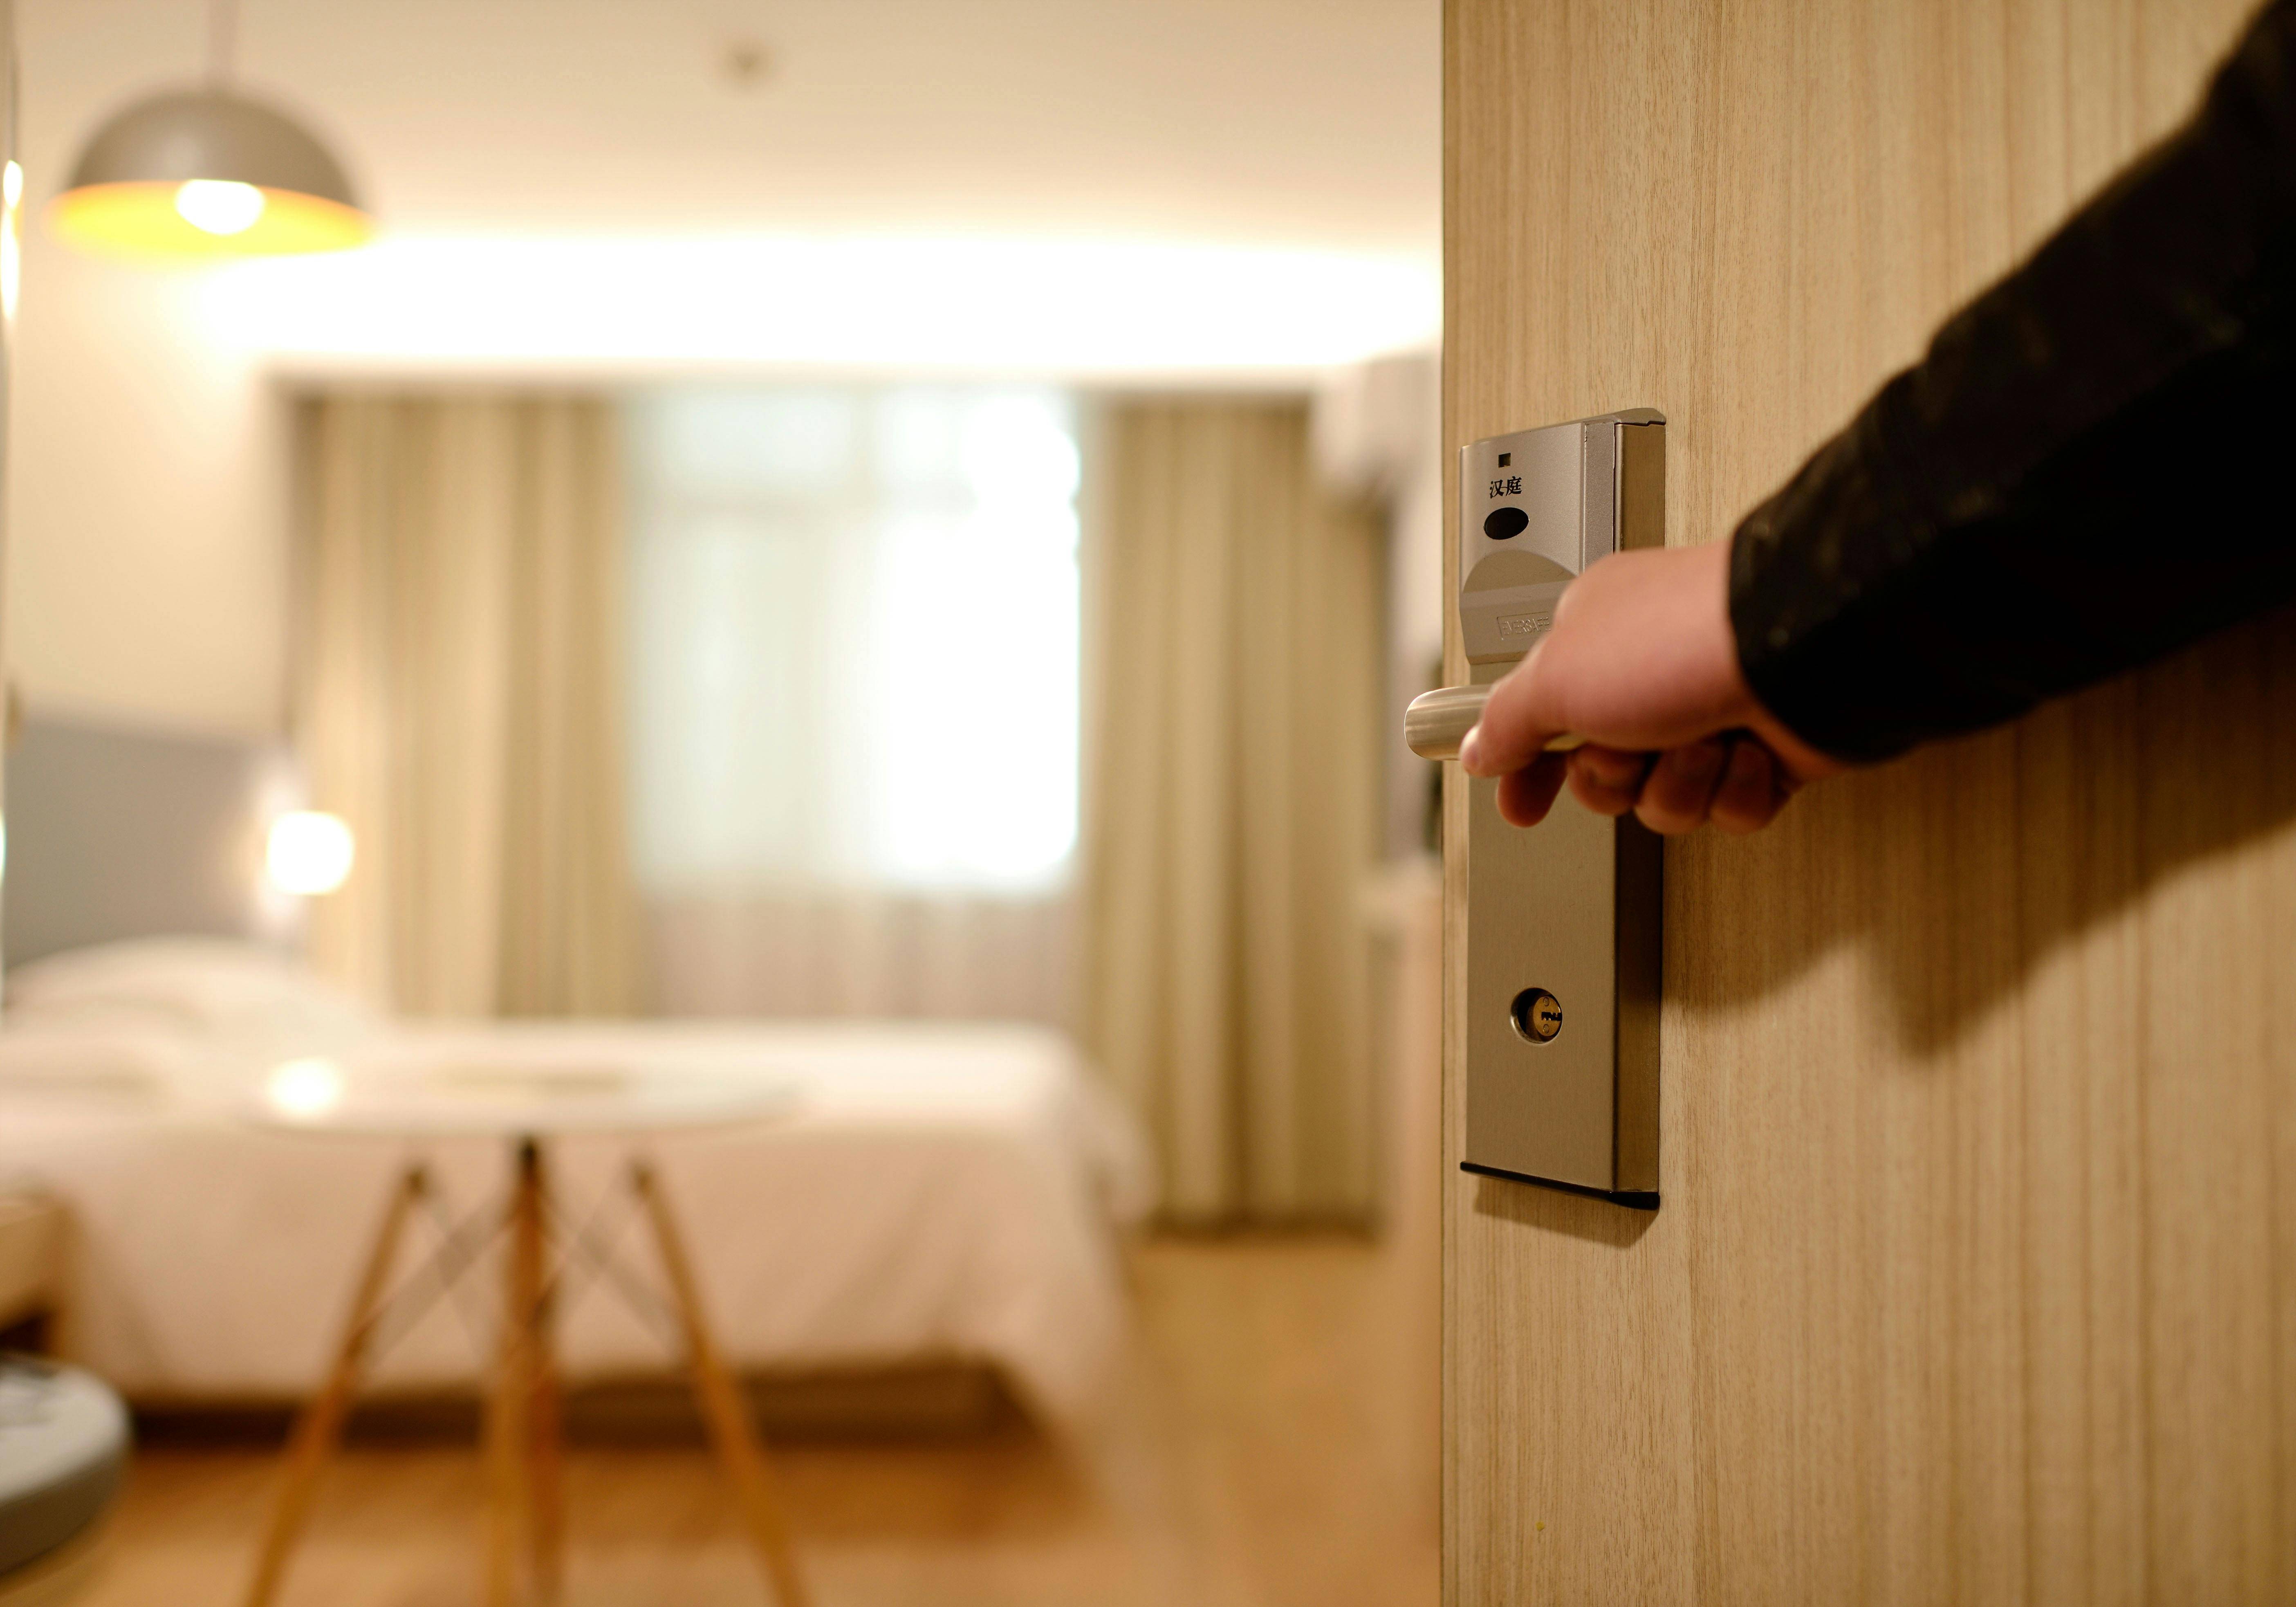 Is hotel wi-fi safe?